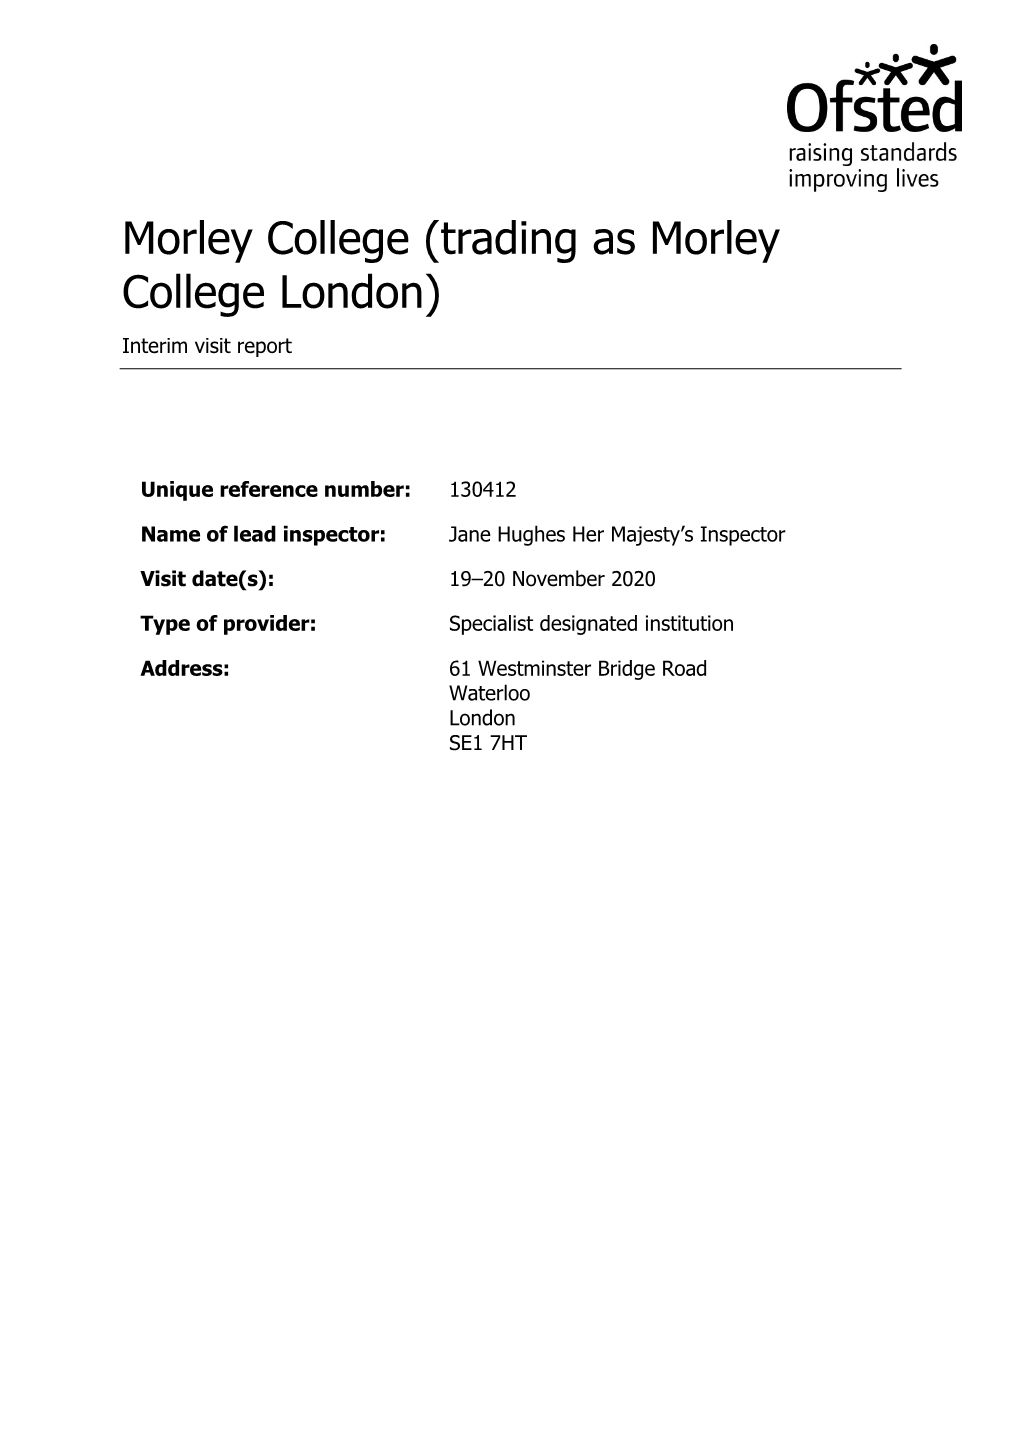 Morley College (Trading As Morley College London) Interim Visit Report